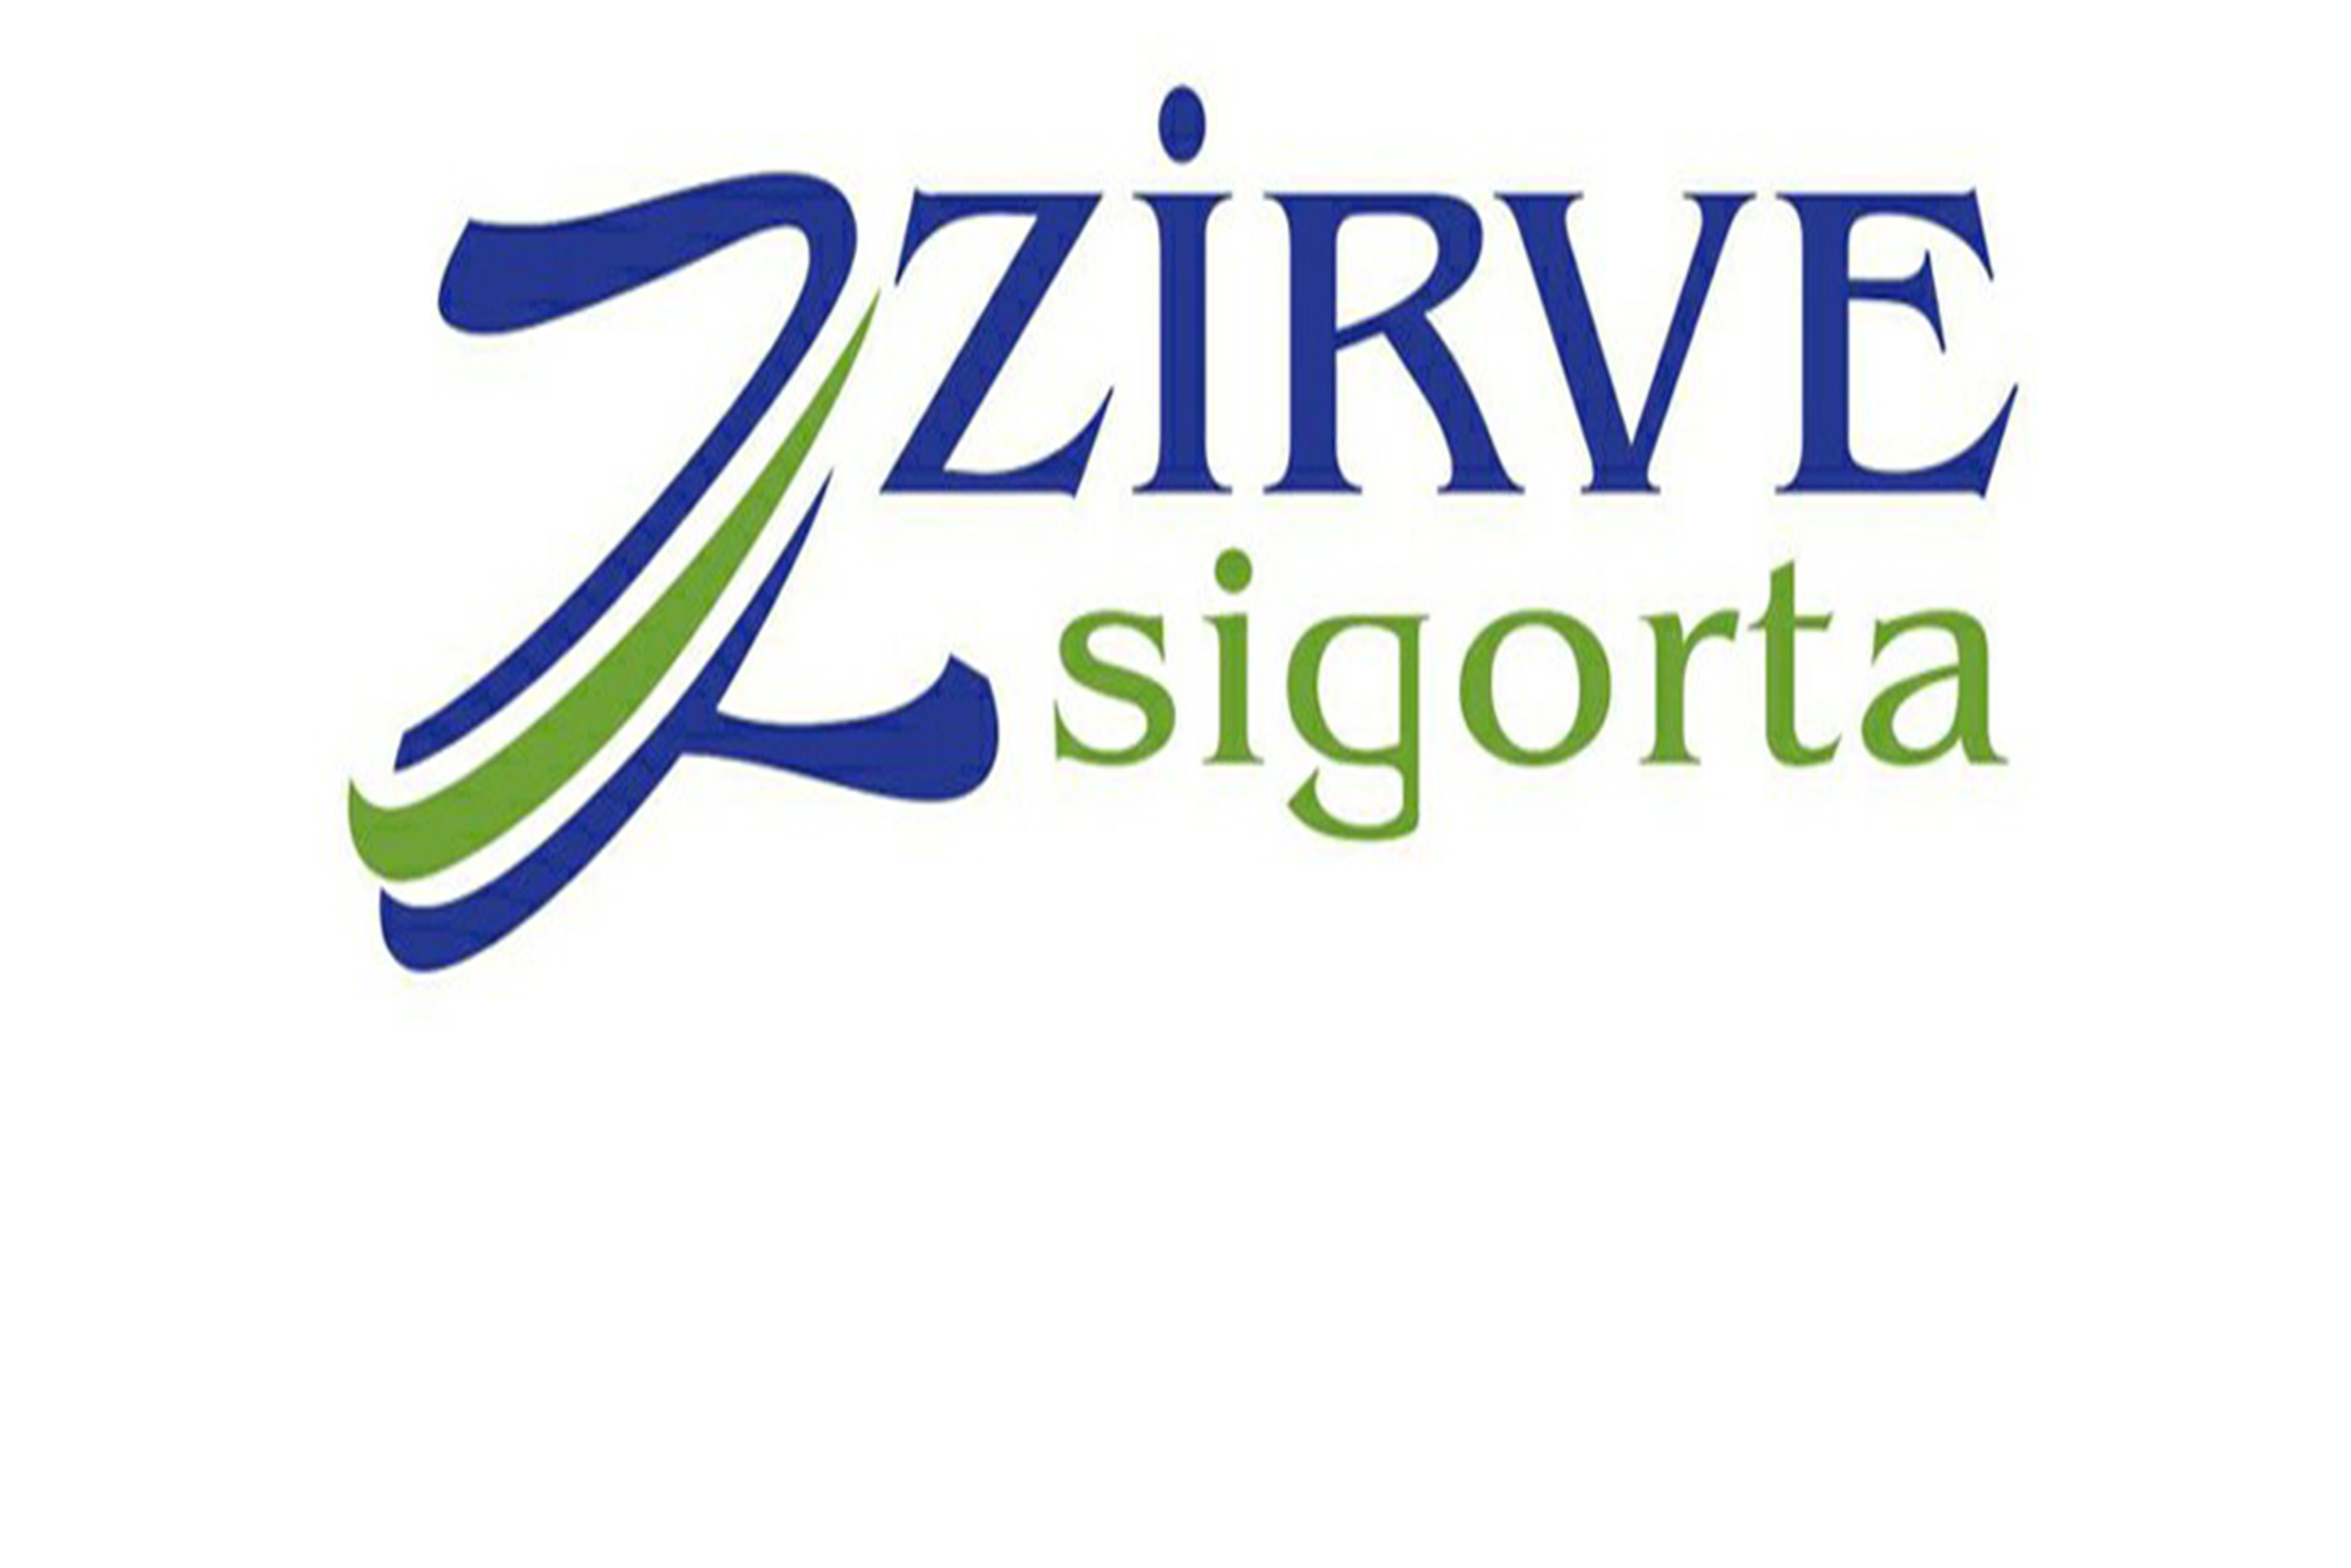 Azant and Zirve Sigorta